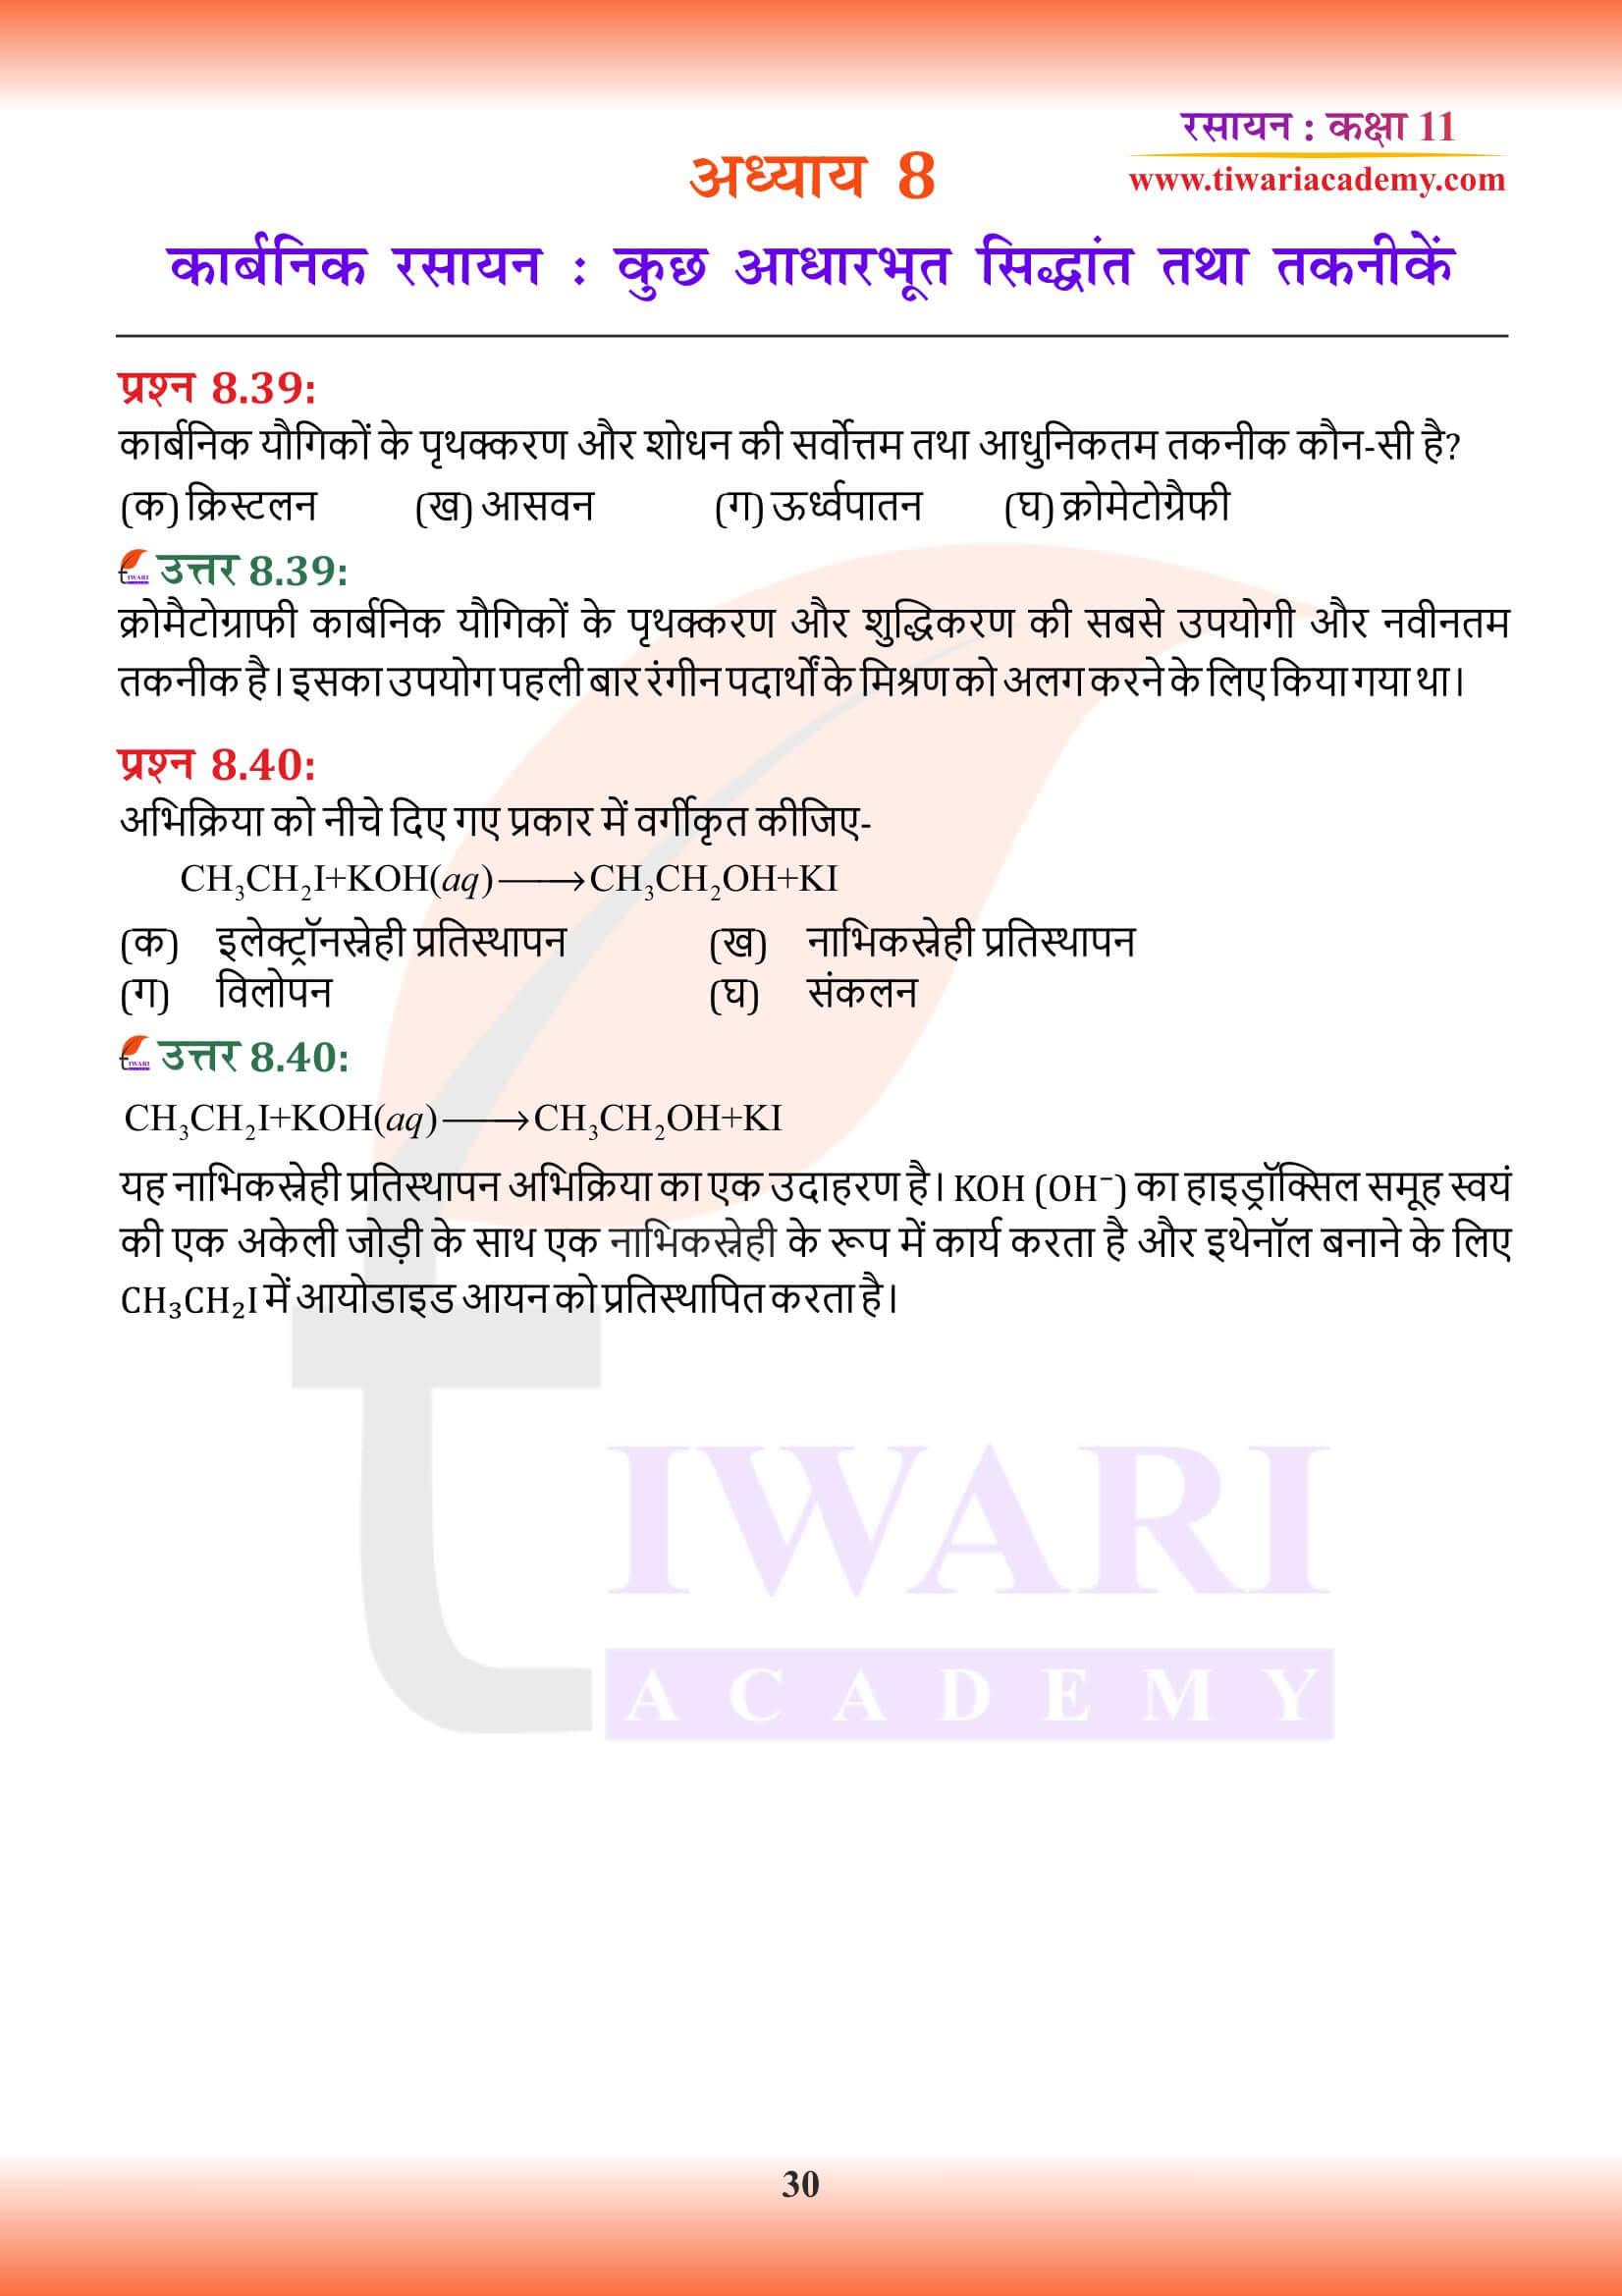 NCERT Class 11 Chemistry Chapter 8 Hindi version